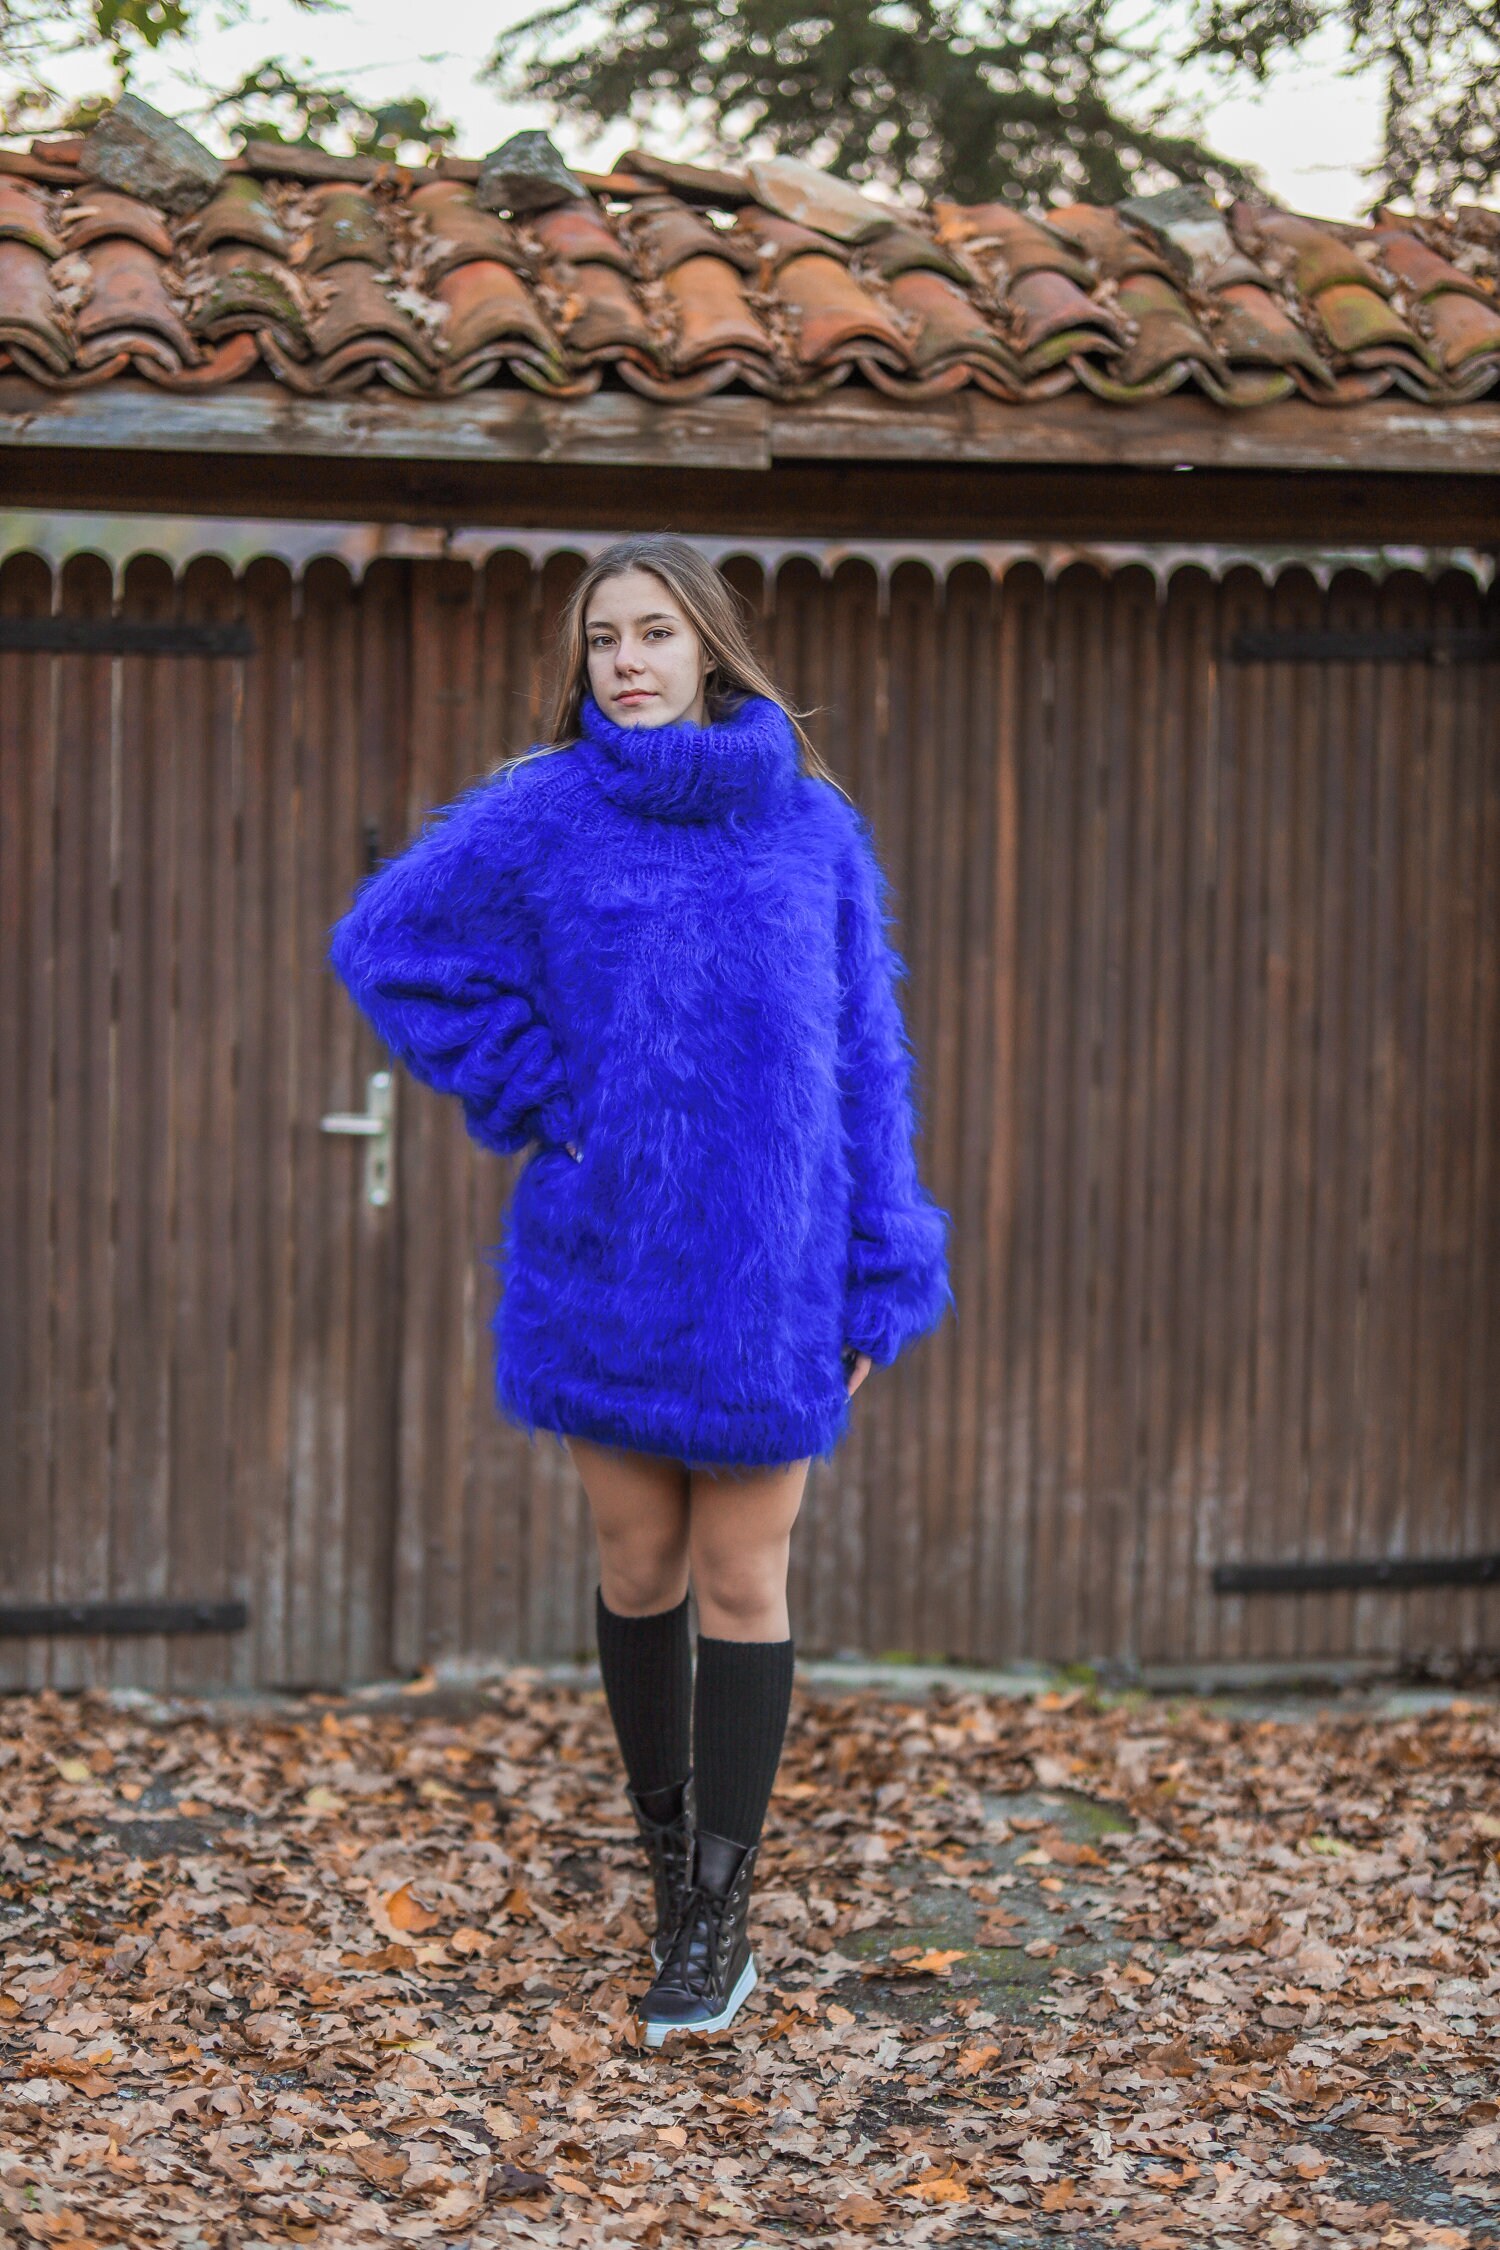 Kleding Dameskleding Sweaters Pullovers Koningsblauwe oversized mohair trui met enorme coltrui voor de winter 